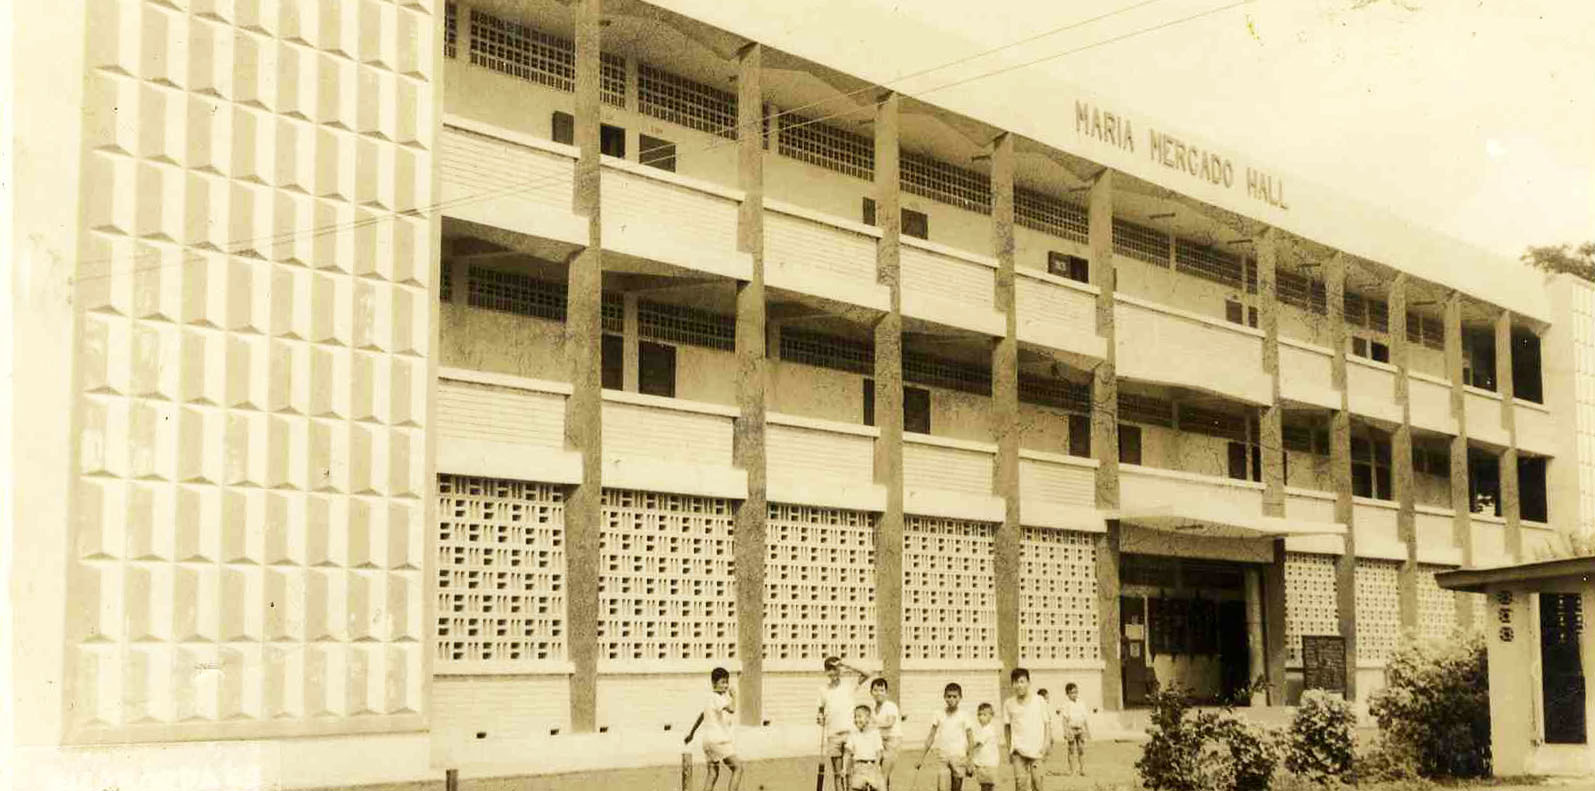 old picture of maria mercado building - Misamis University